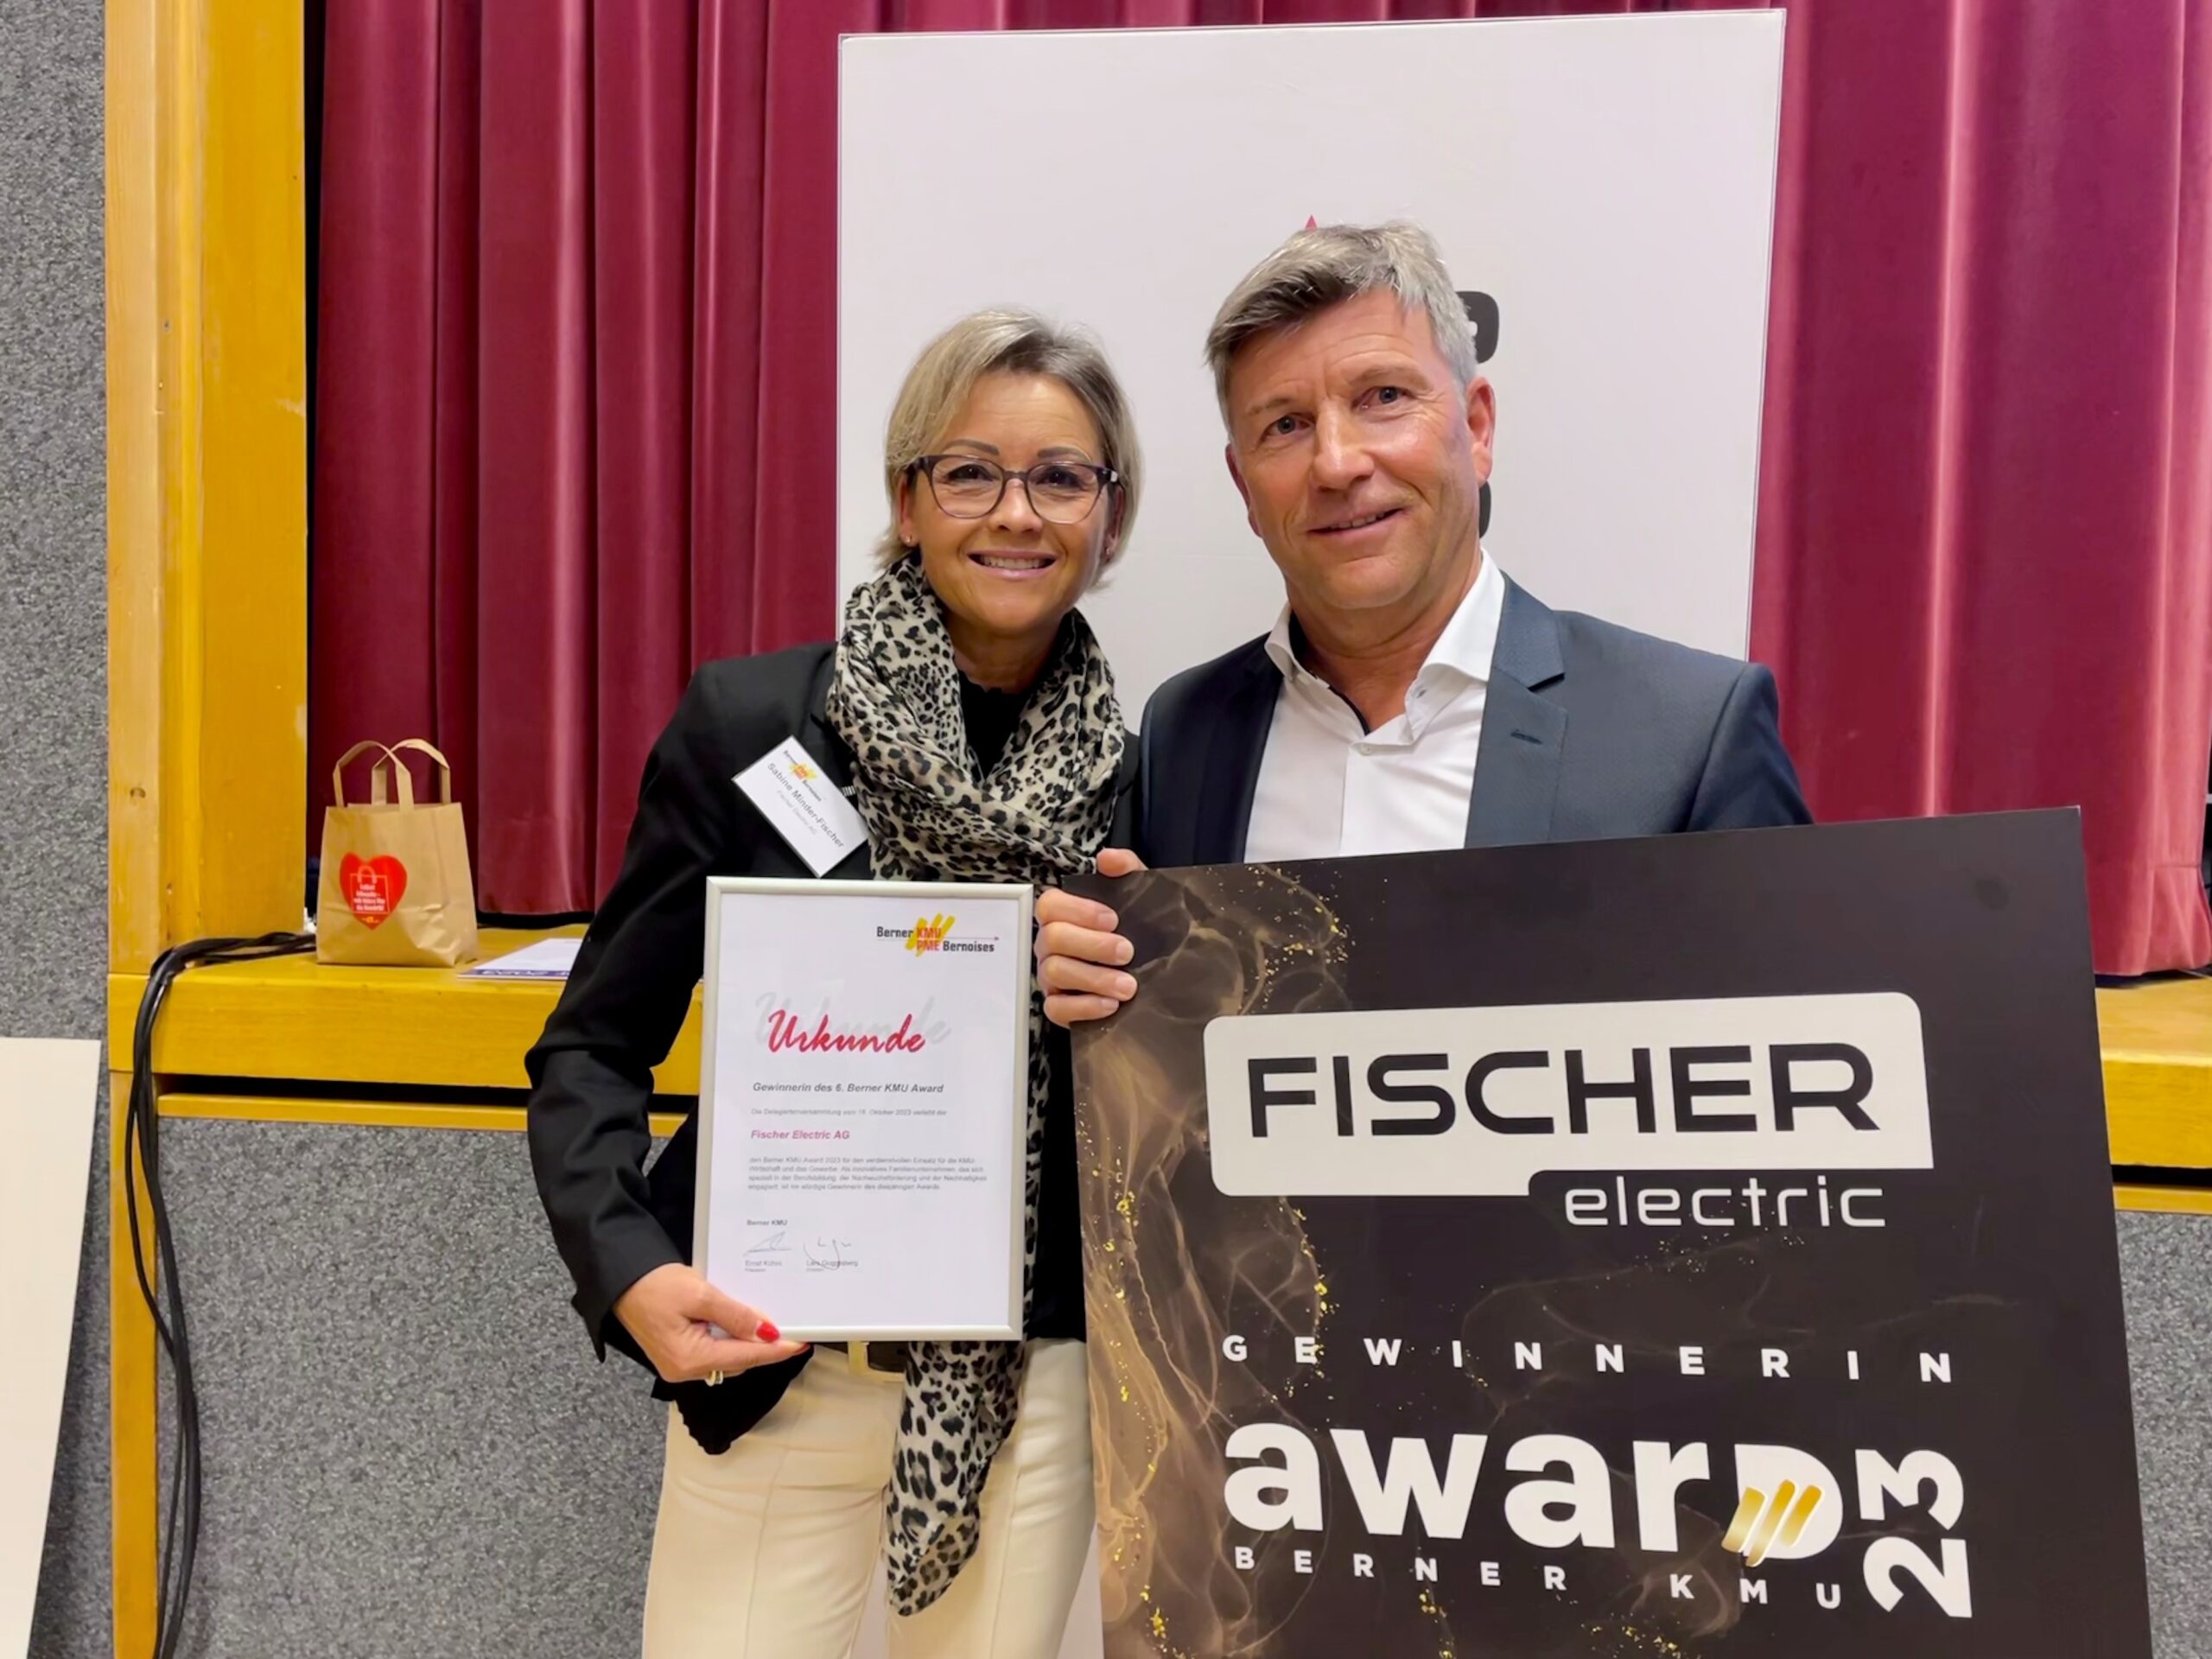 Fischer Electric AG holt den Berner KMU Award 2023 nach Biel!